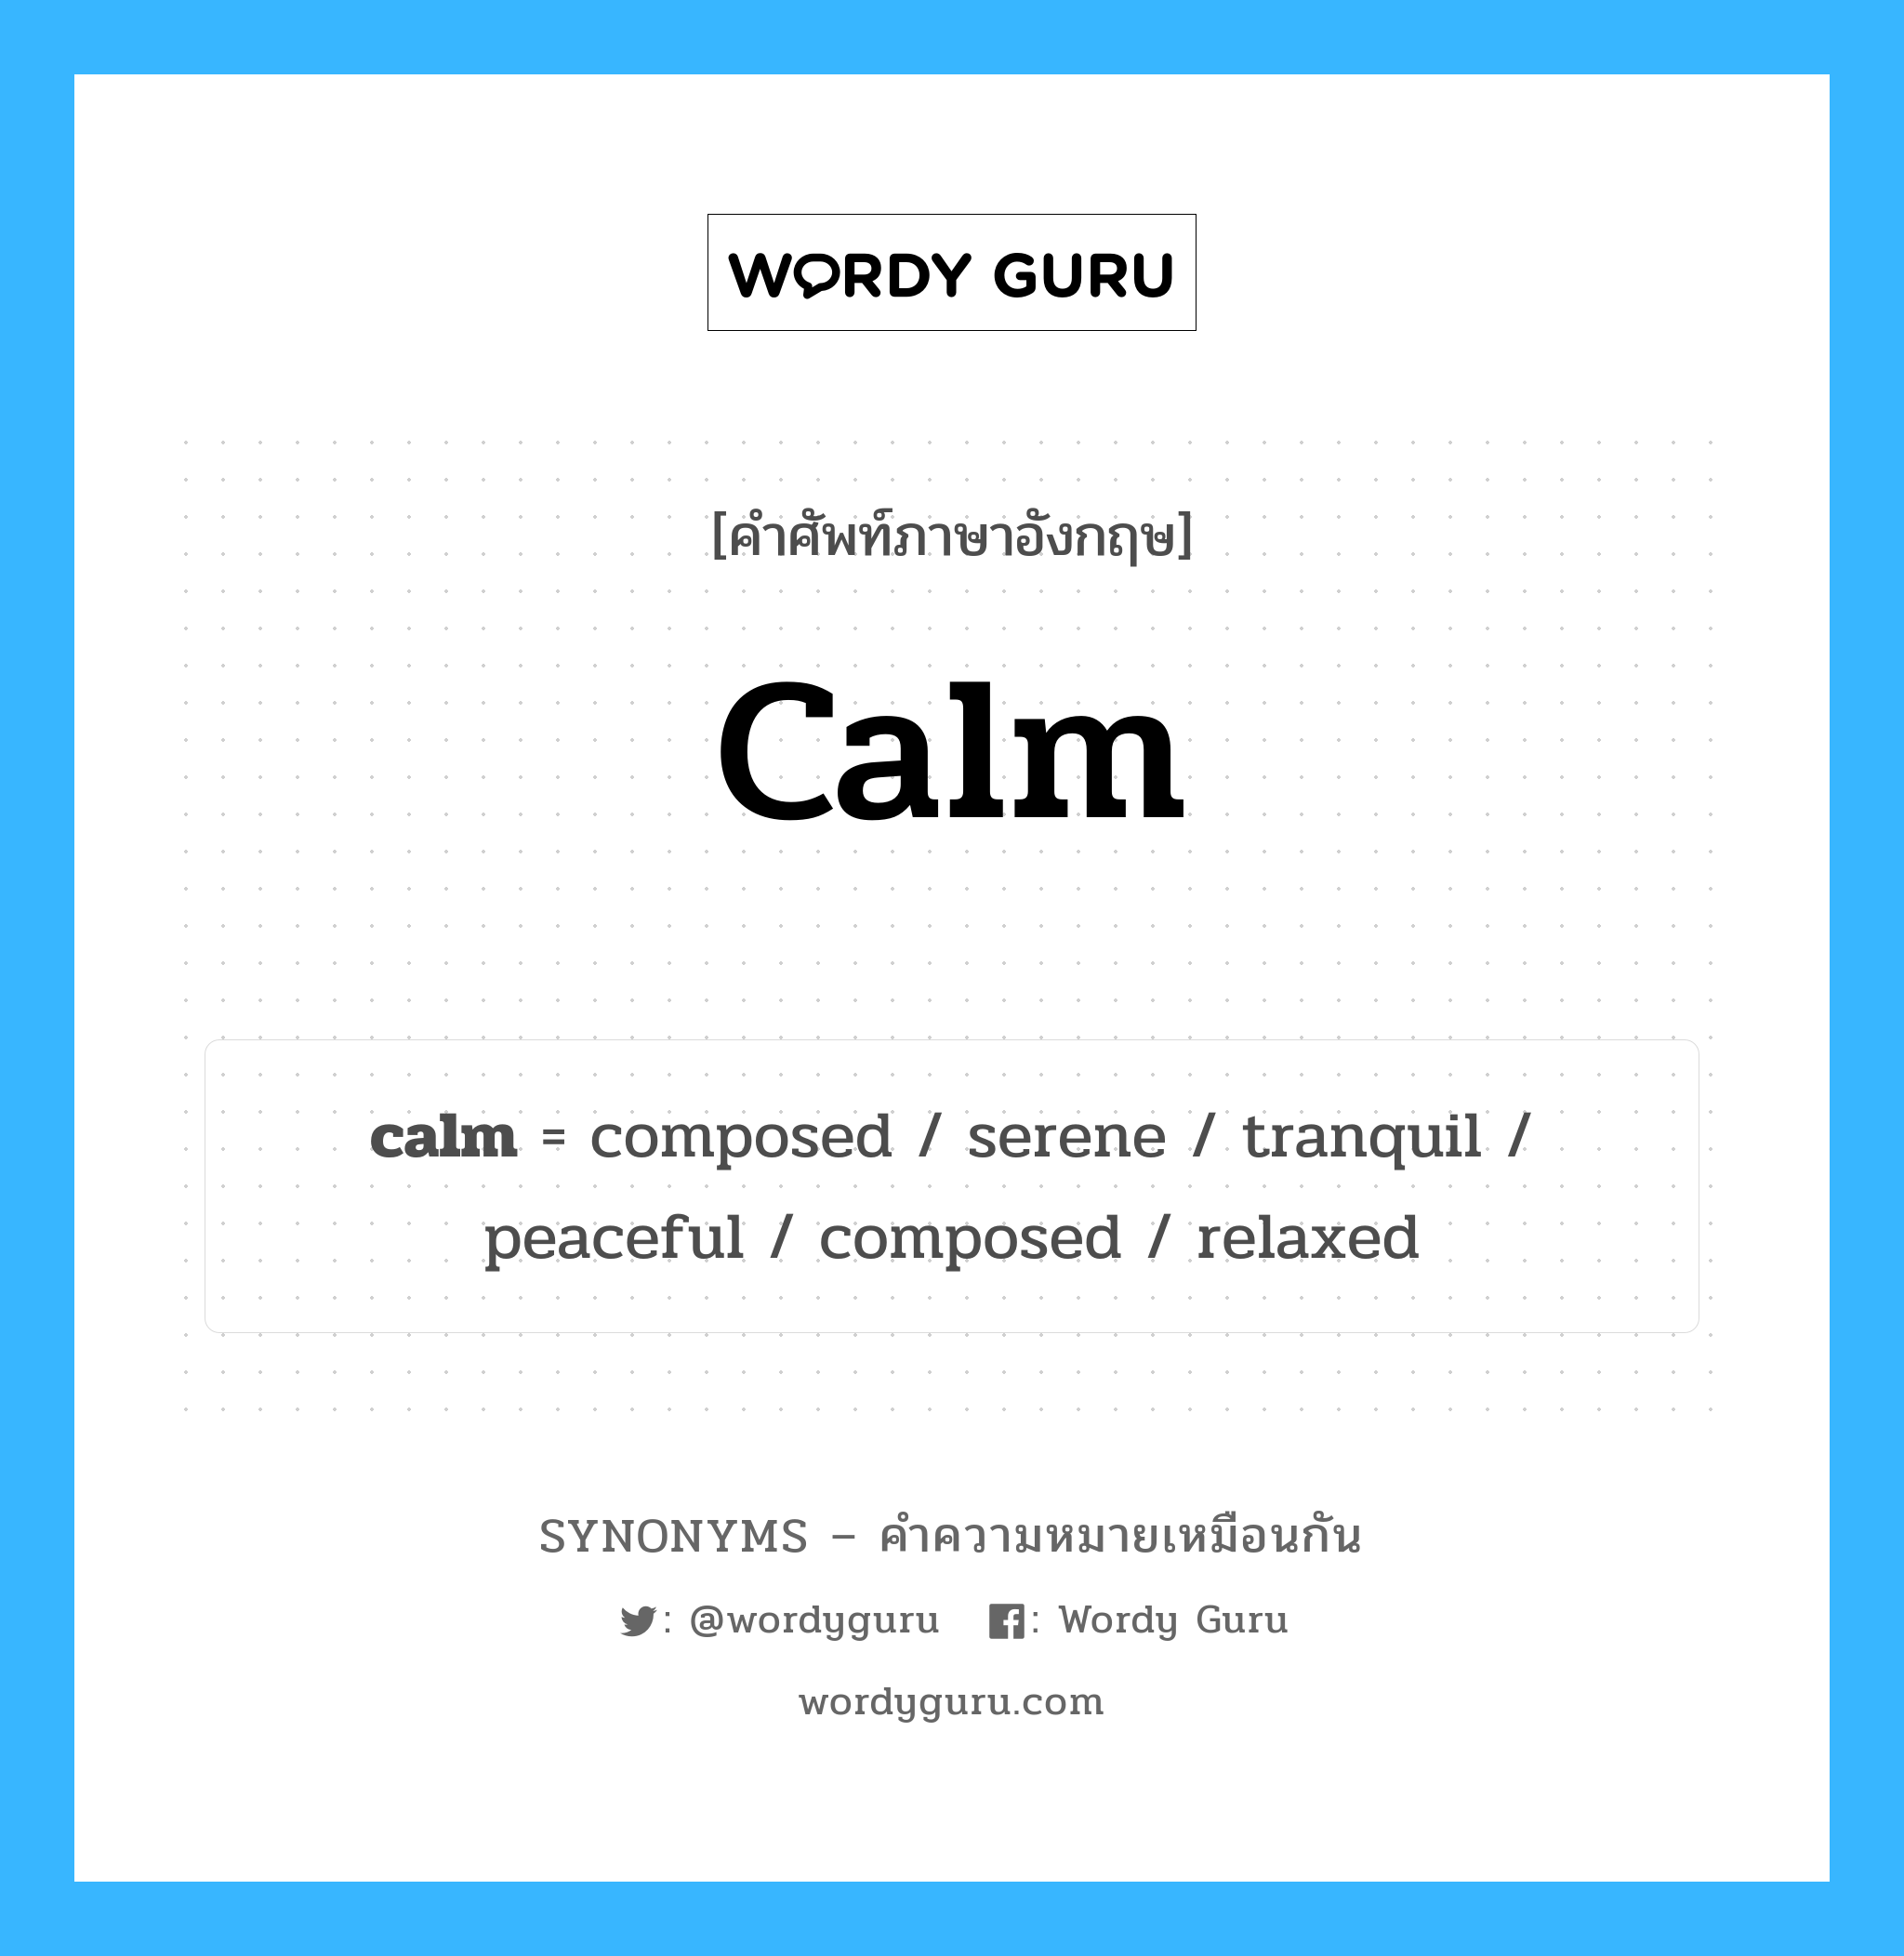 serene เป็นหนึ่งใน calm และมีคำอื่น ๆ อีกดังนี้, คำศัพท์ภาษาอังกฤษ serene ความหมายคล้ายกันกับ calm แปลว่า ซีรีน หมวด calm